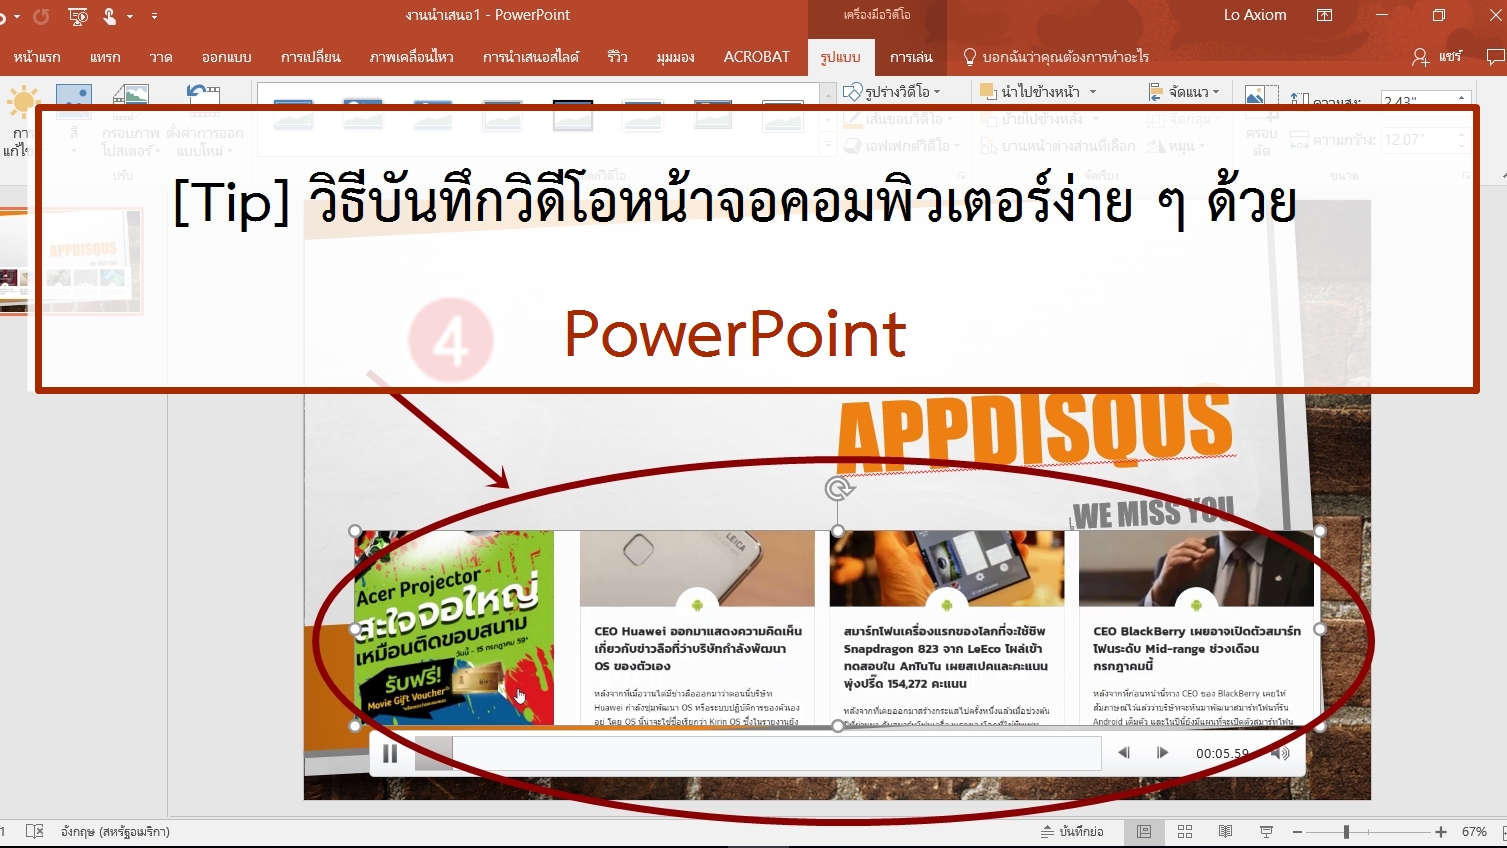 Screen shot recording video by powerpoint | วิธี | [Tip] วิธีบันทึกวิดีโอหน้าจอคอมพิวเตอร์ง่าย ๆ ด้วย PowerPoint